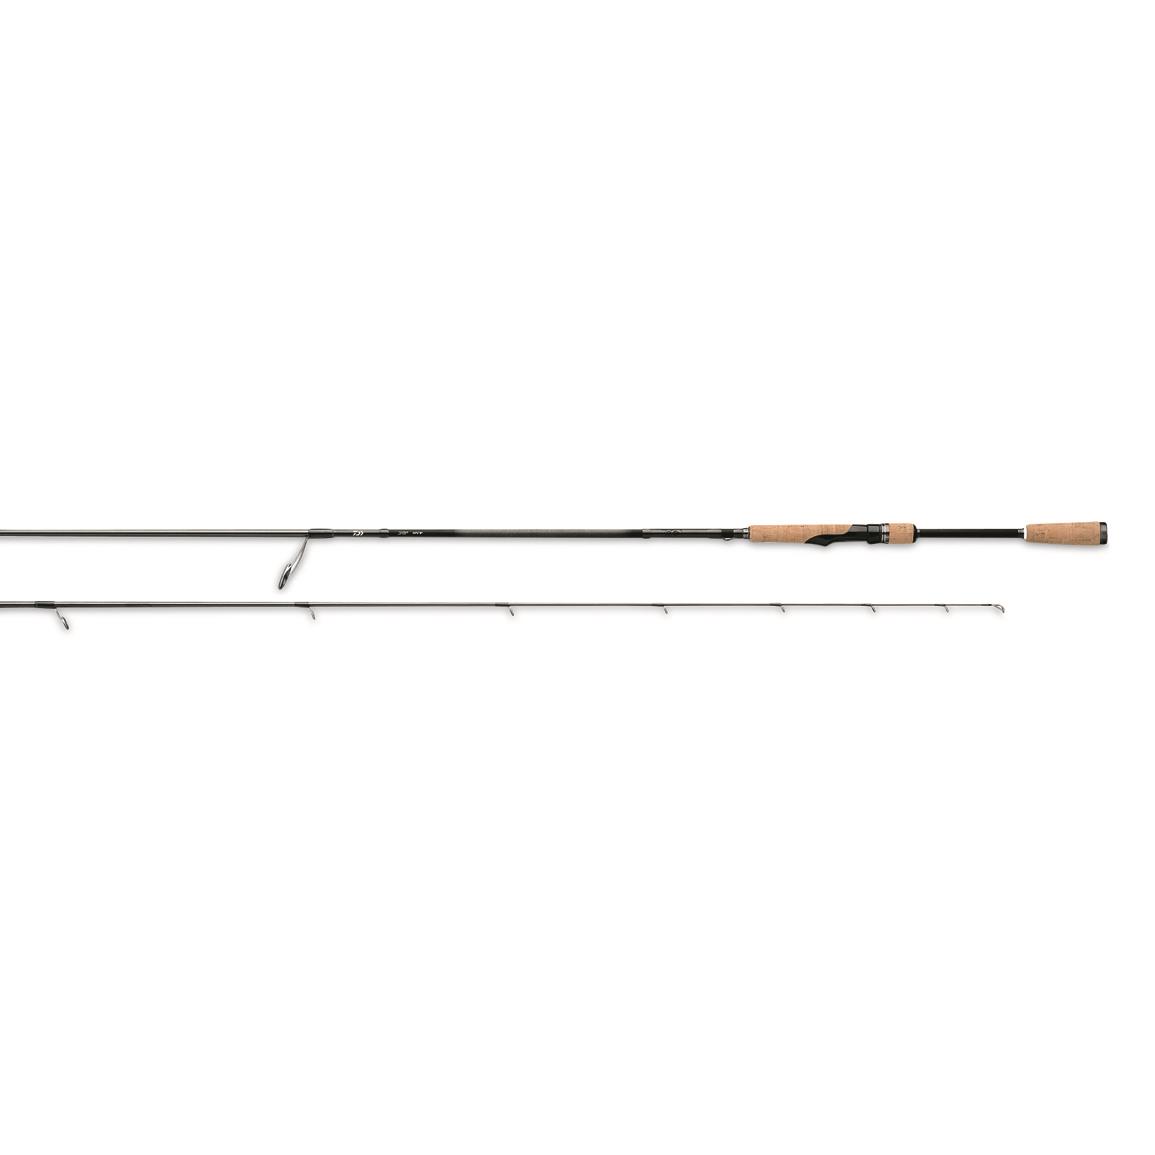 Daiwa Tatula Spinning Rod, 6'6" Length, Medium Power, Fast Action